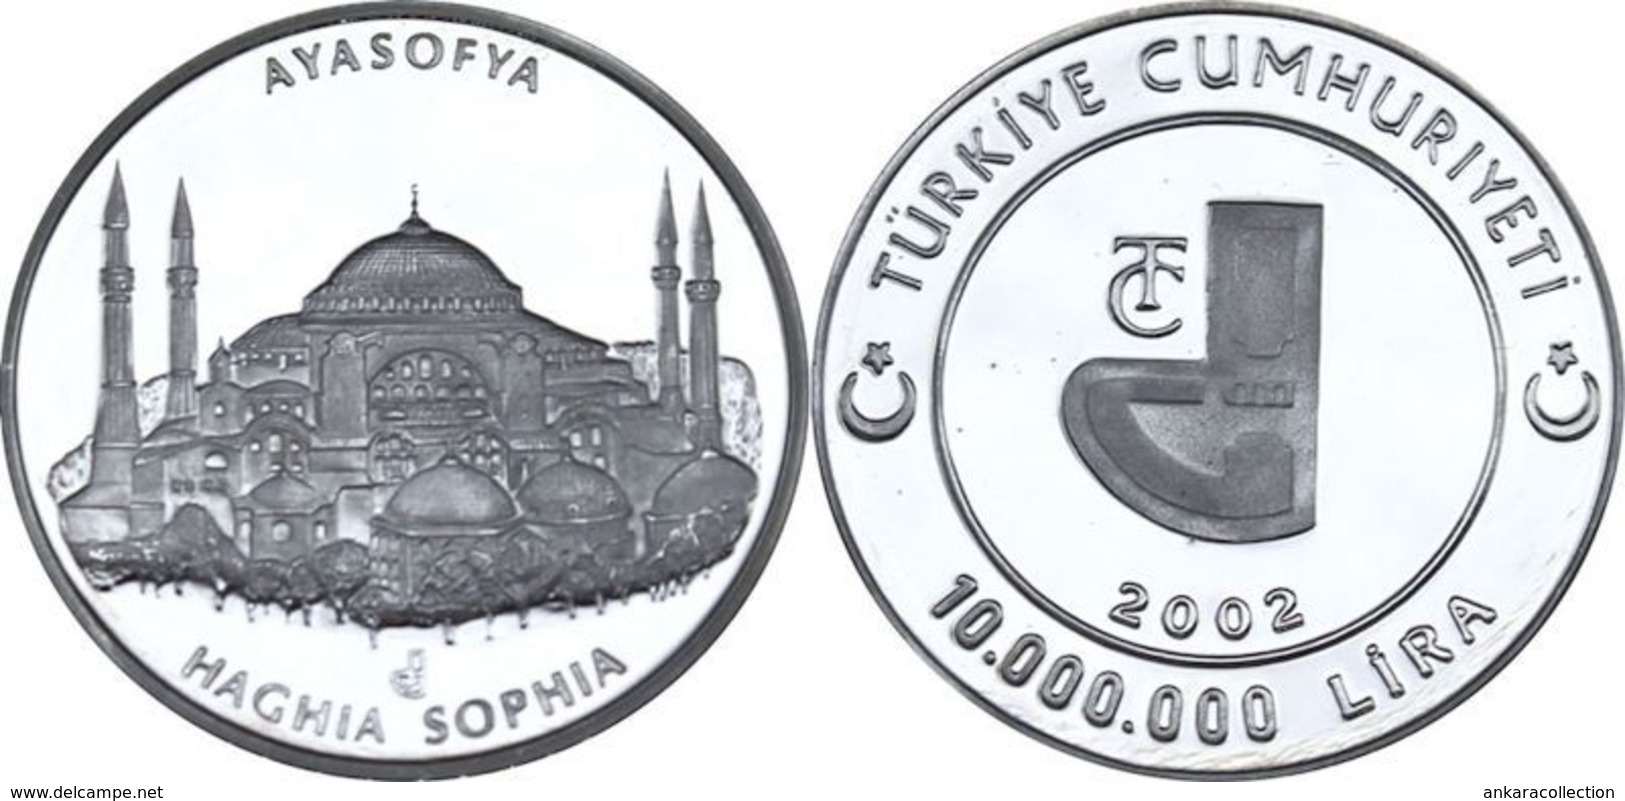 AC - HAGIA SOPHIA - AYA SOFYA MOSQUE COMMEMORATIVE SILVER COIN TURKEY 2002 PROOF UNCIRCULATED - Türkei